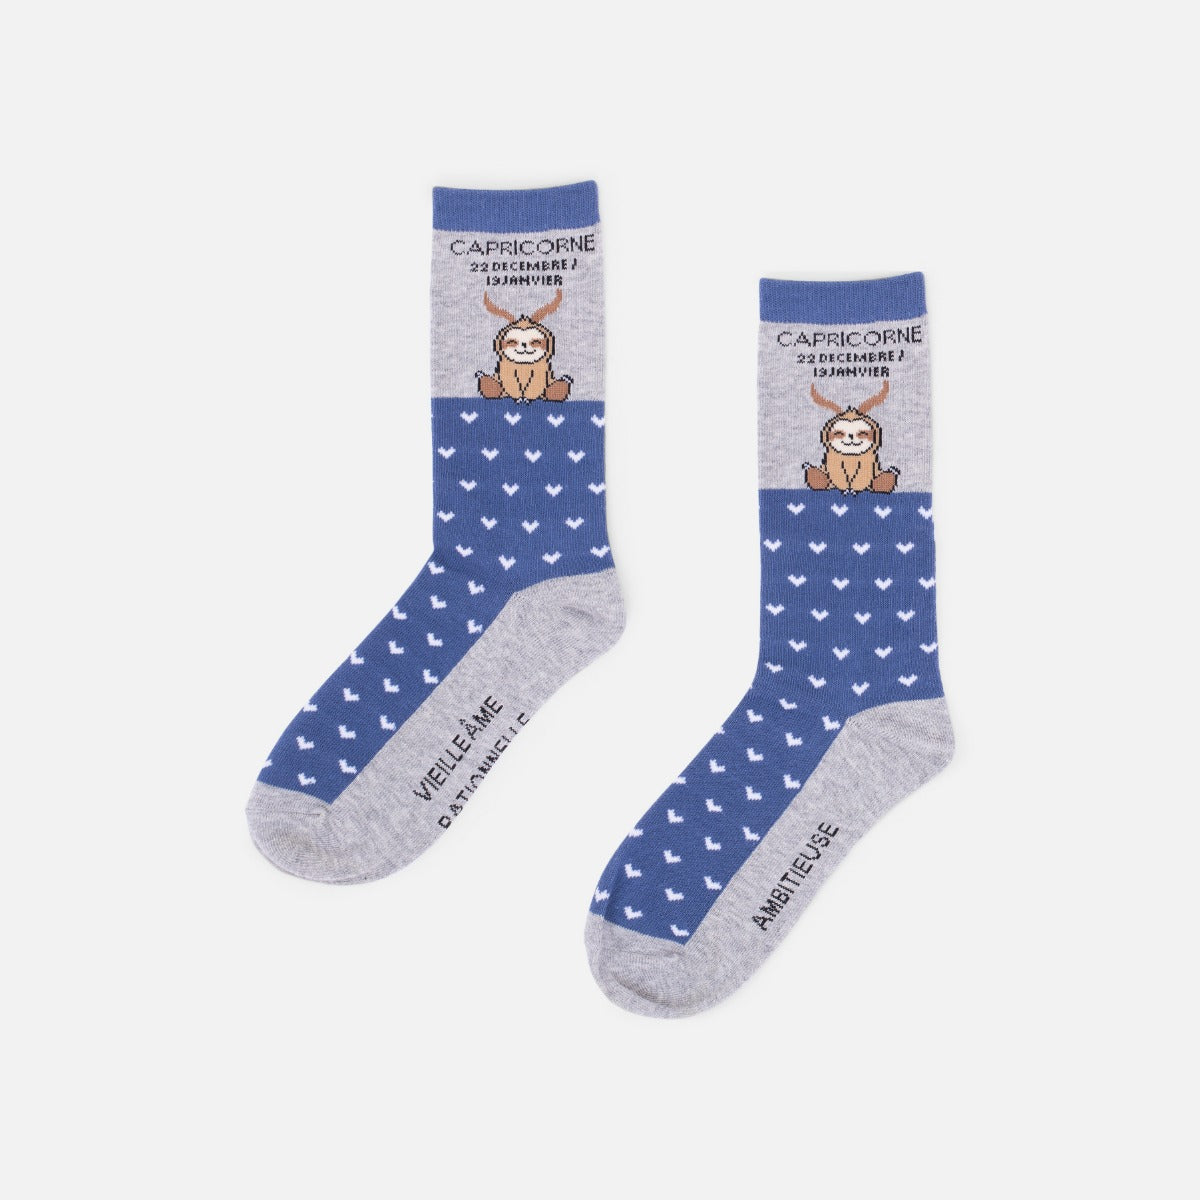 Grey and blue socks astrological sign "capricorn"